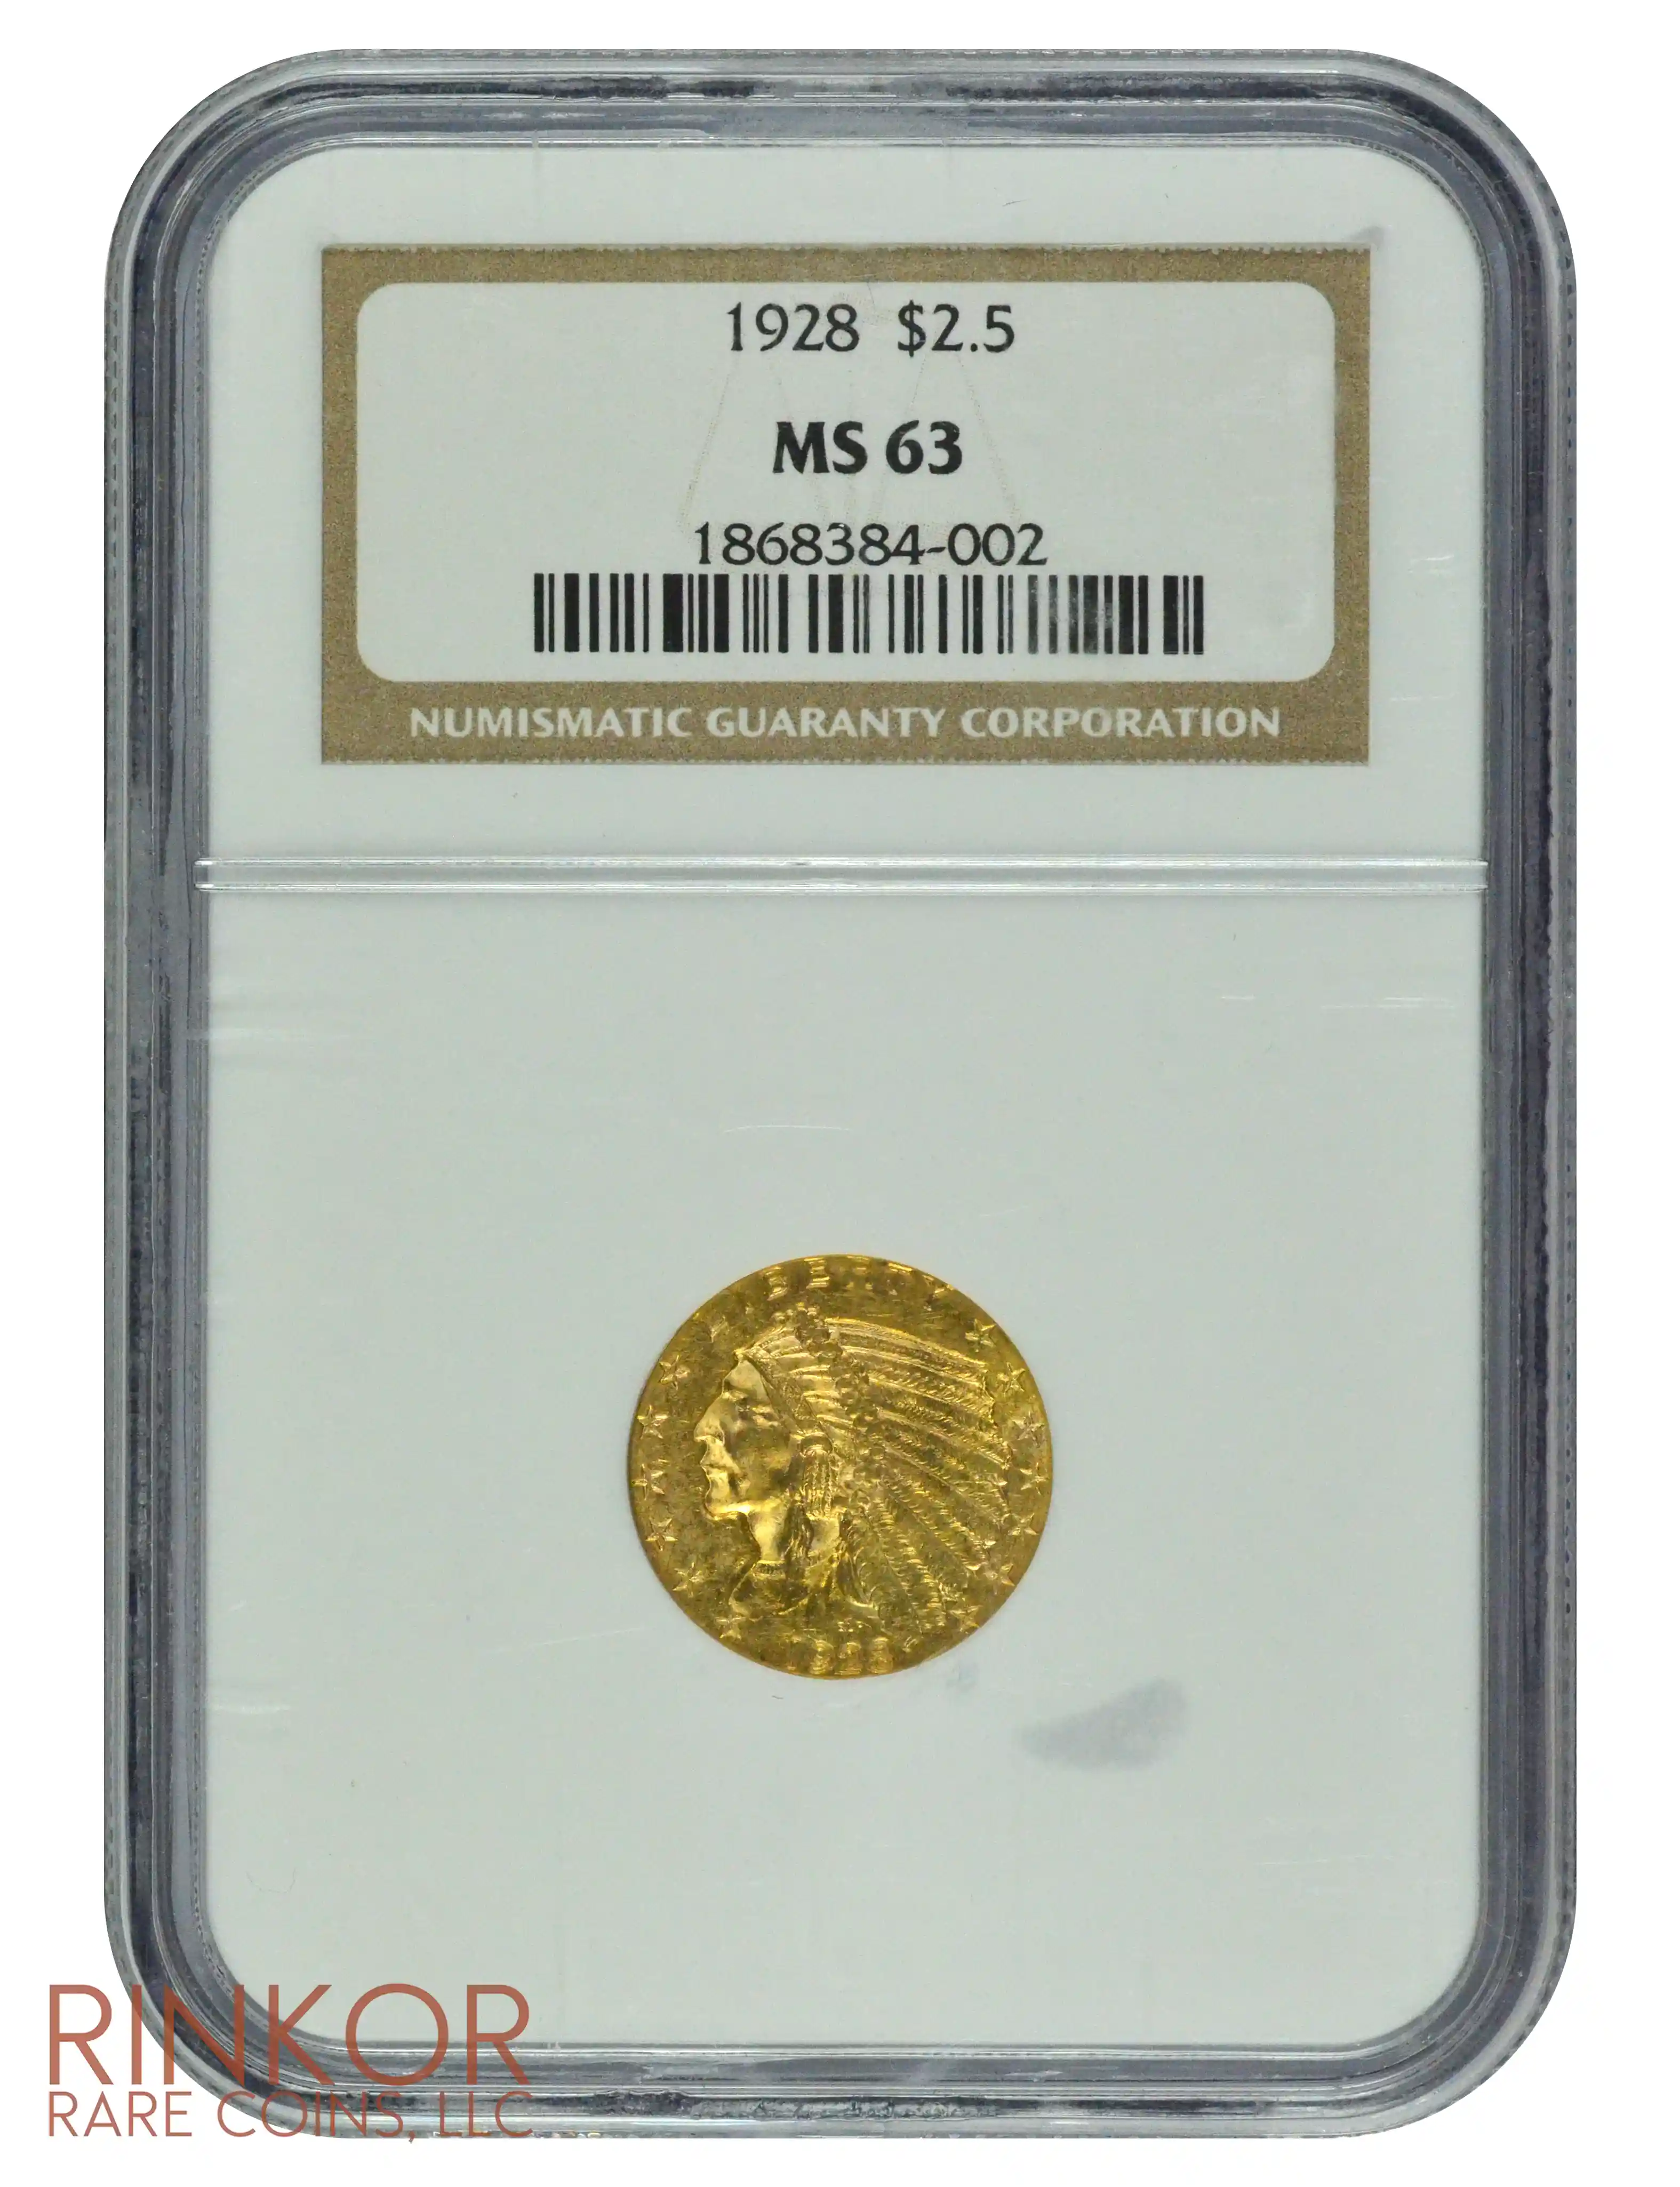 1928 $2.50 Indian Head NGC MS 63 